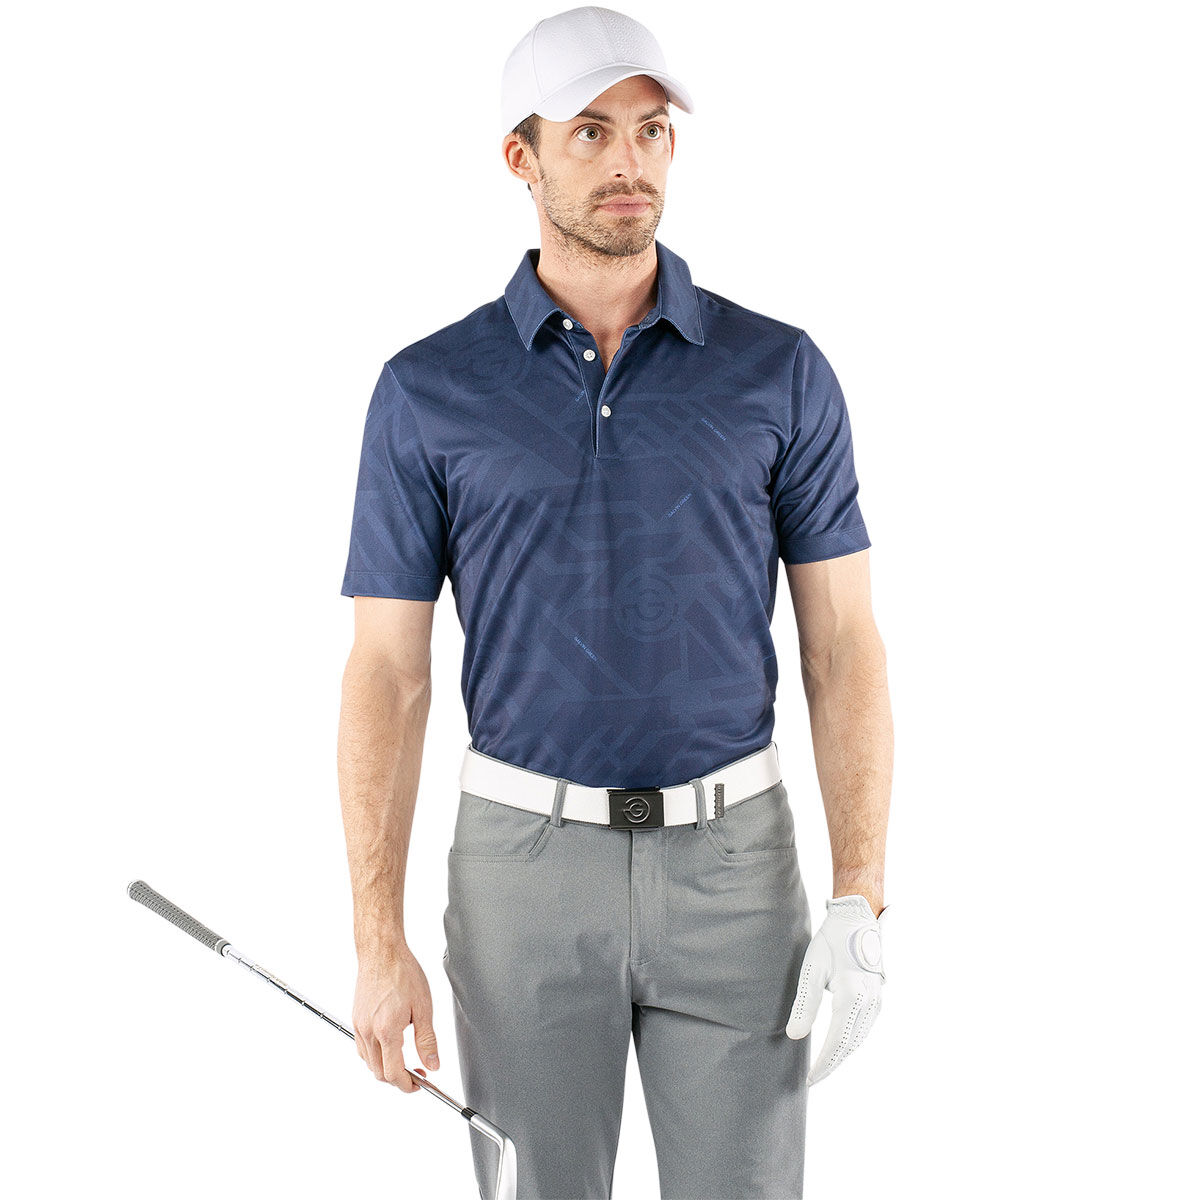 Galvin Green Men’s Maze Golf Polo Shirt, Mens, Navy blue, Large | American Golf